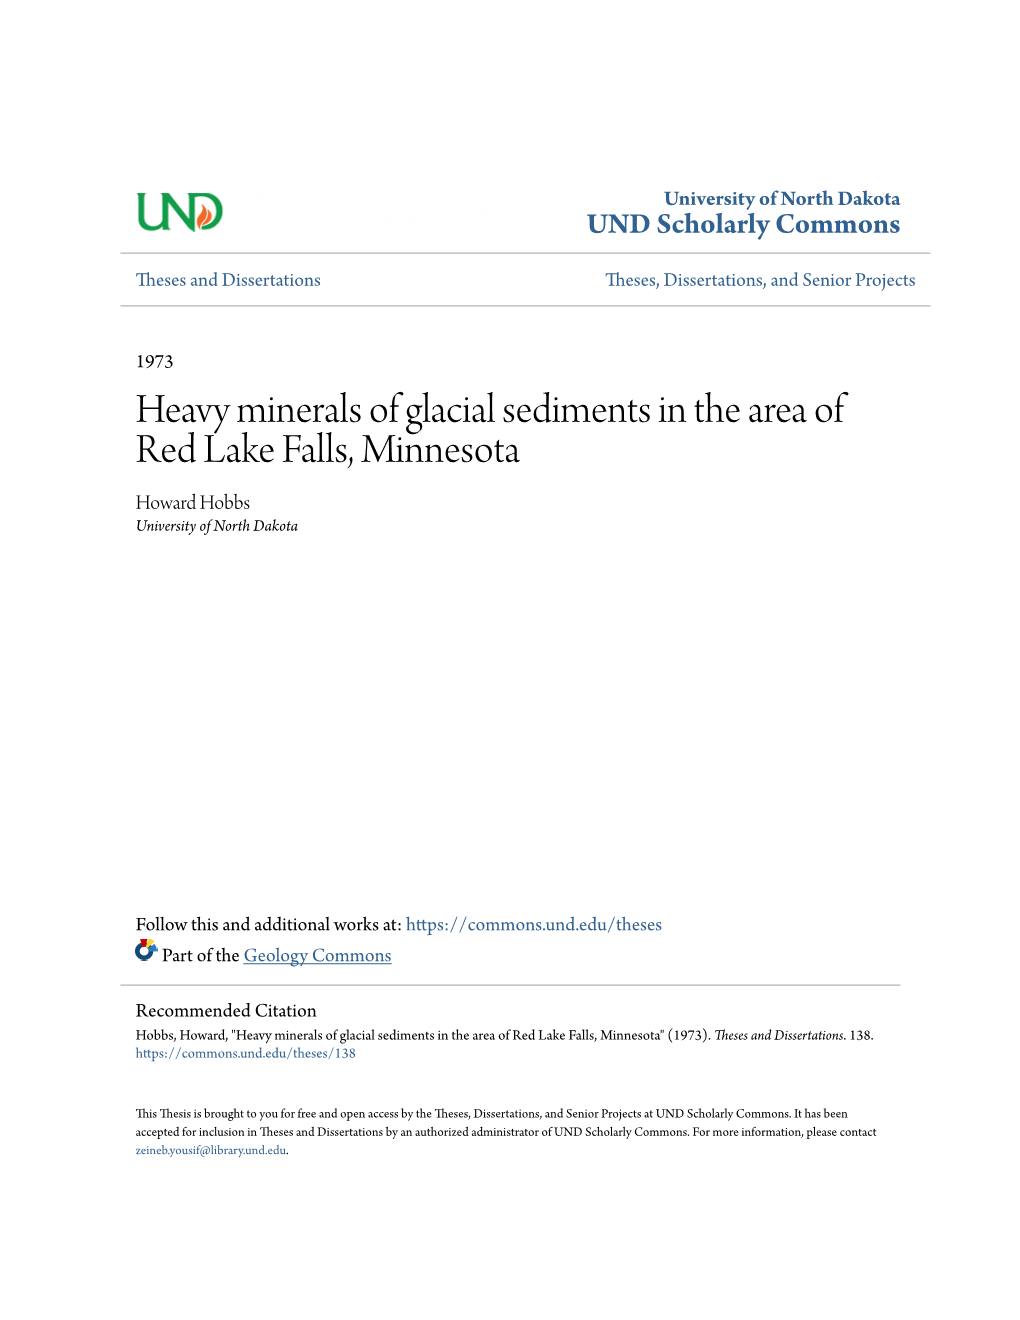 Heavy Minerals of Glacial Sediments in the Area of Red Lake Falls, Minnesota Howard Hobbs University of North Dakota